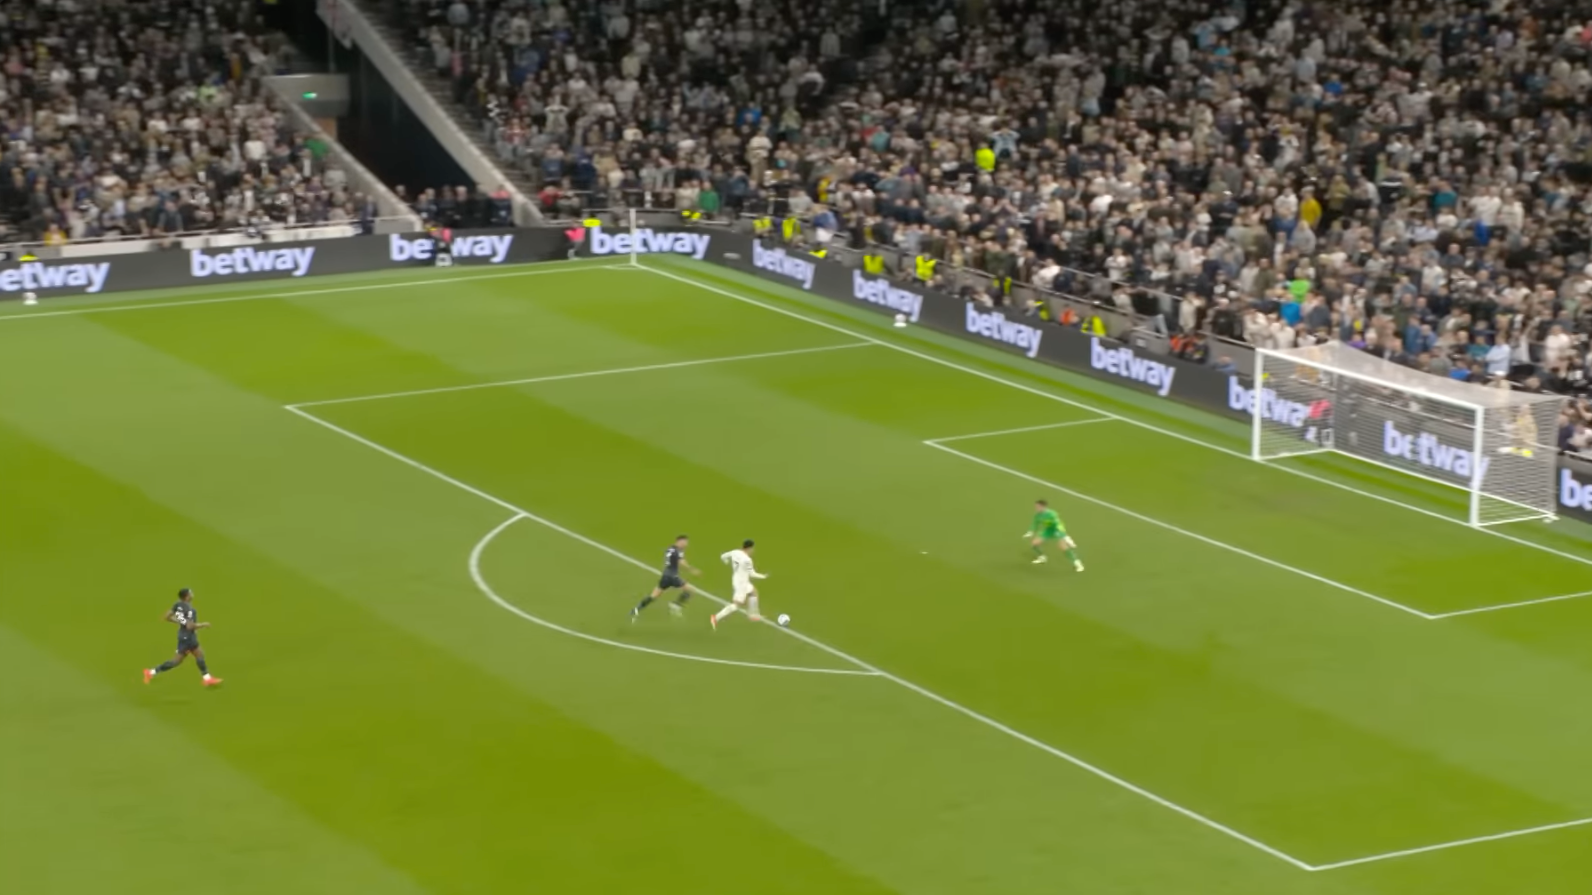 Stefan Ortega save against Son Man City vs Spurs